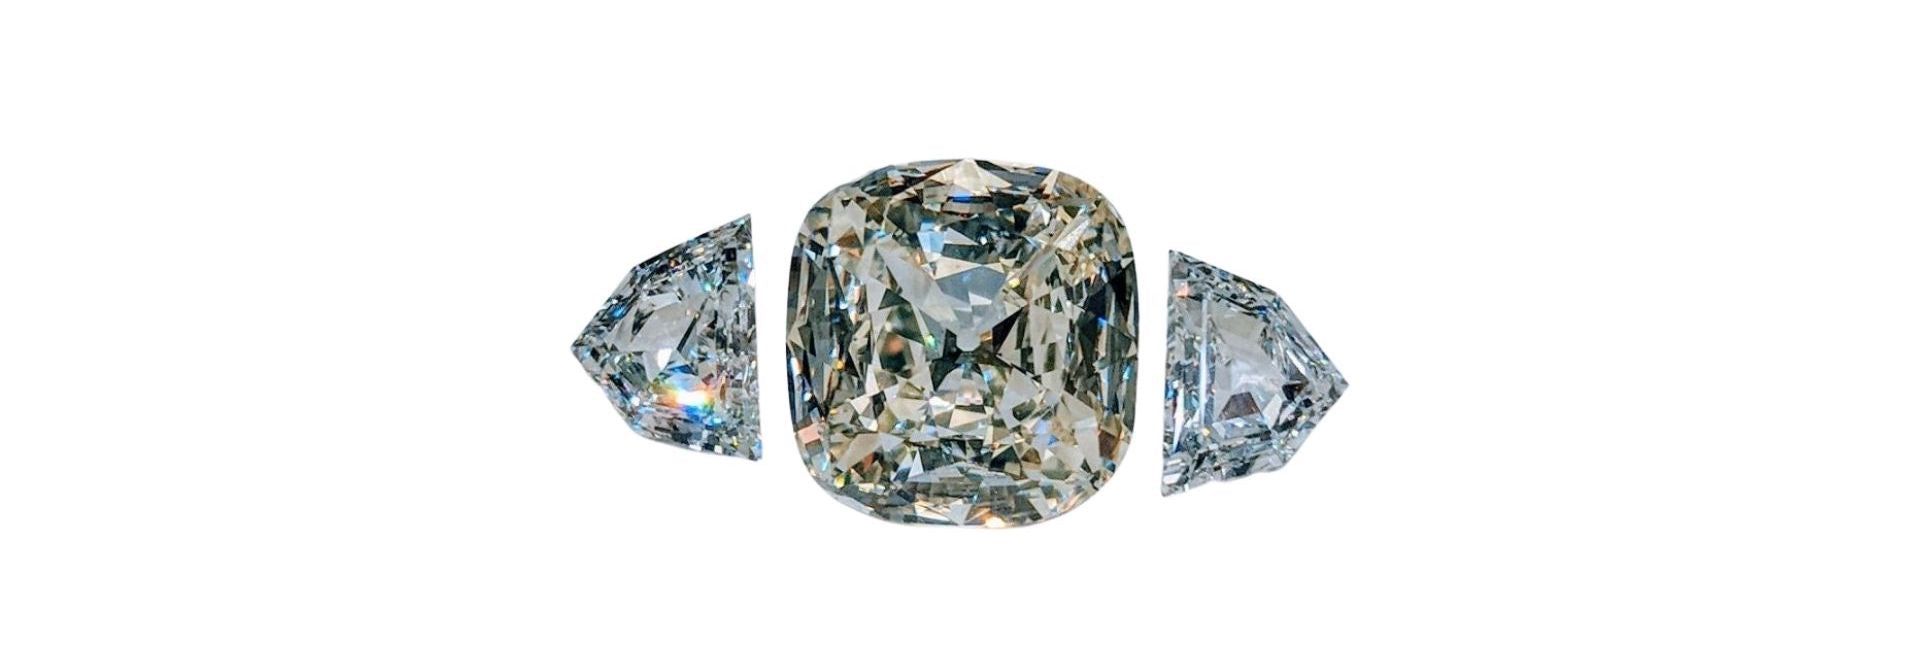 64Facets Loose Diamonds arranged in Half Shield Design